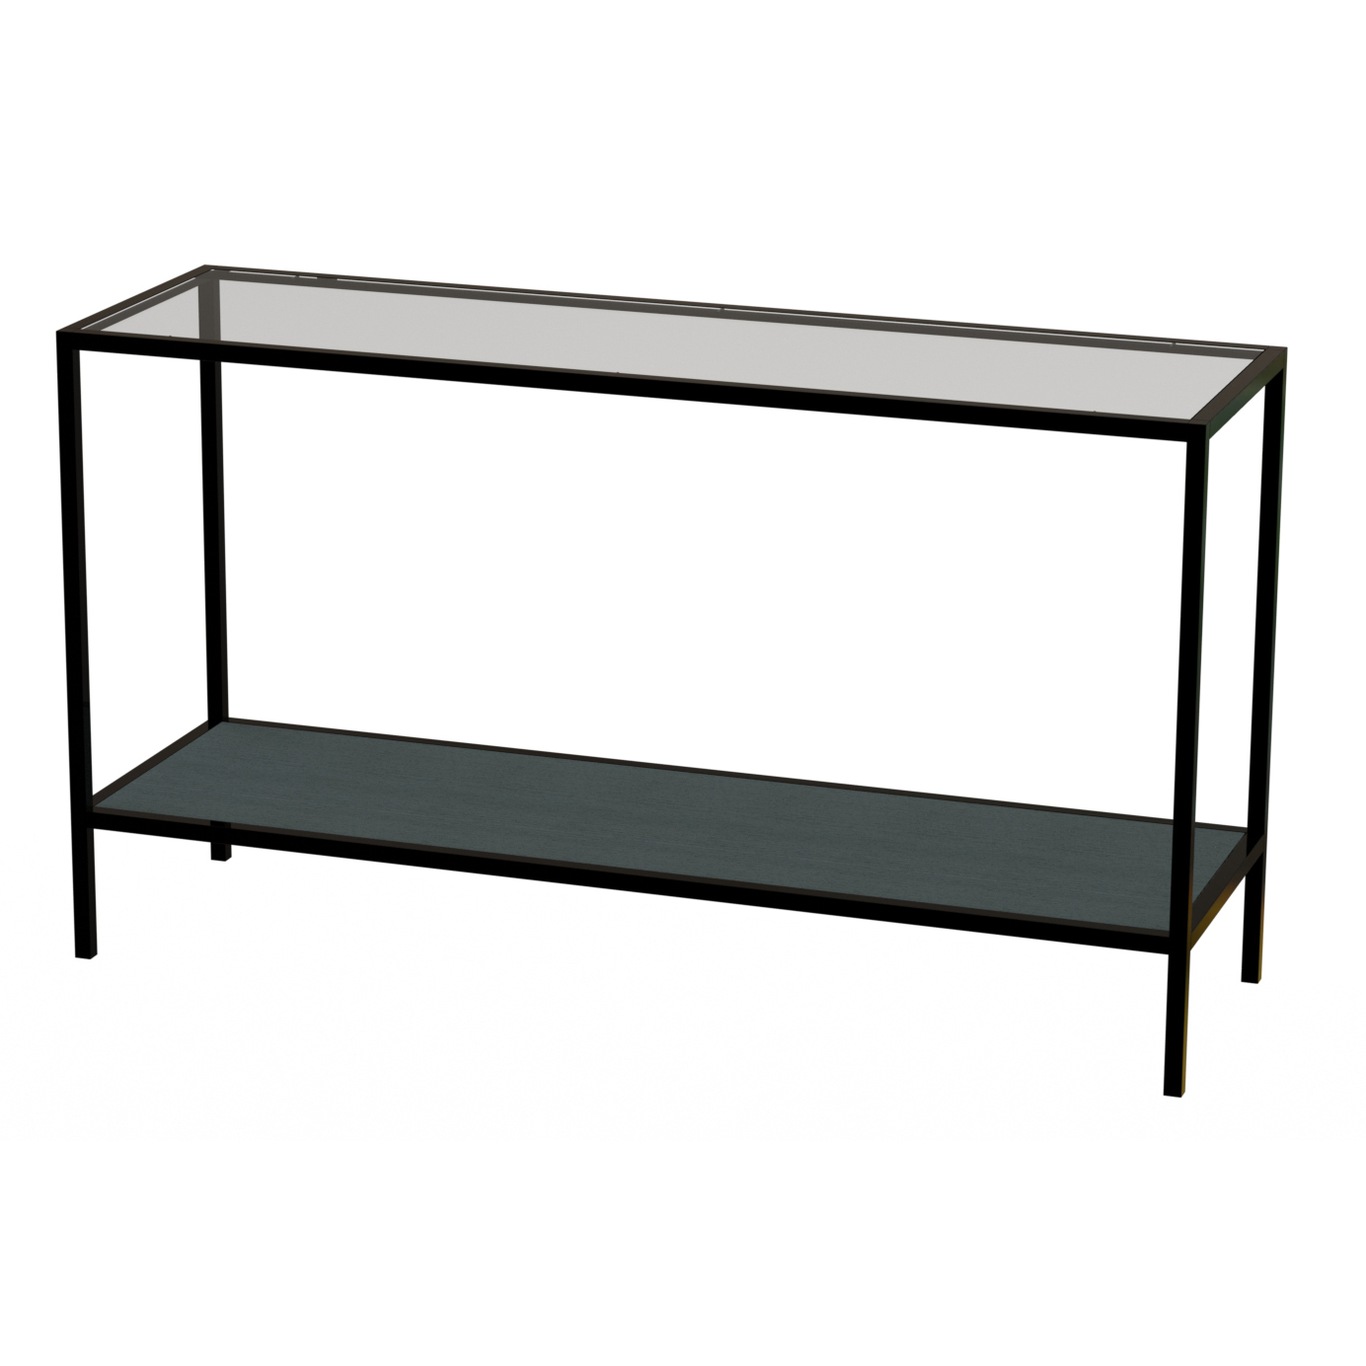 2000 Side Table Metal 124x38x71, Black